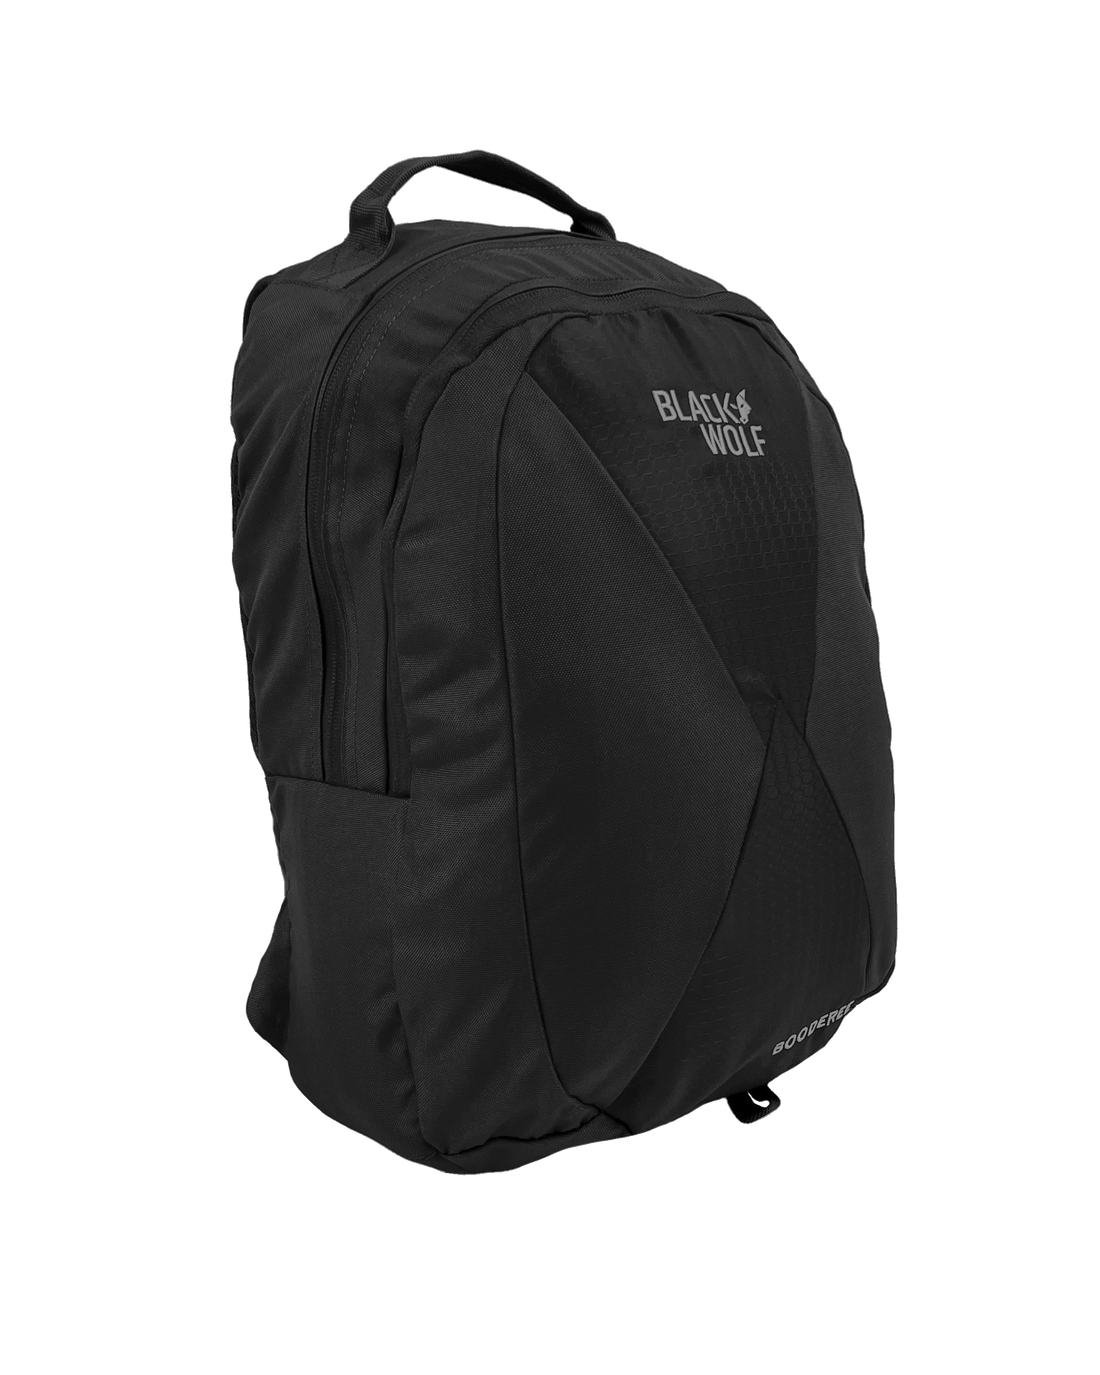 Black Wolf - Booderee 20L Backpack - Jet Black